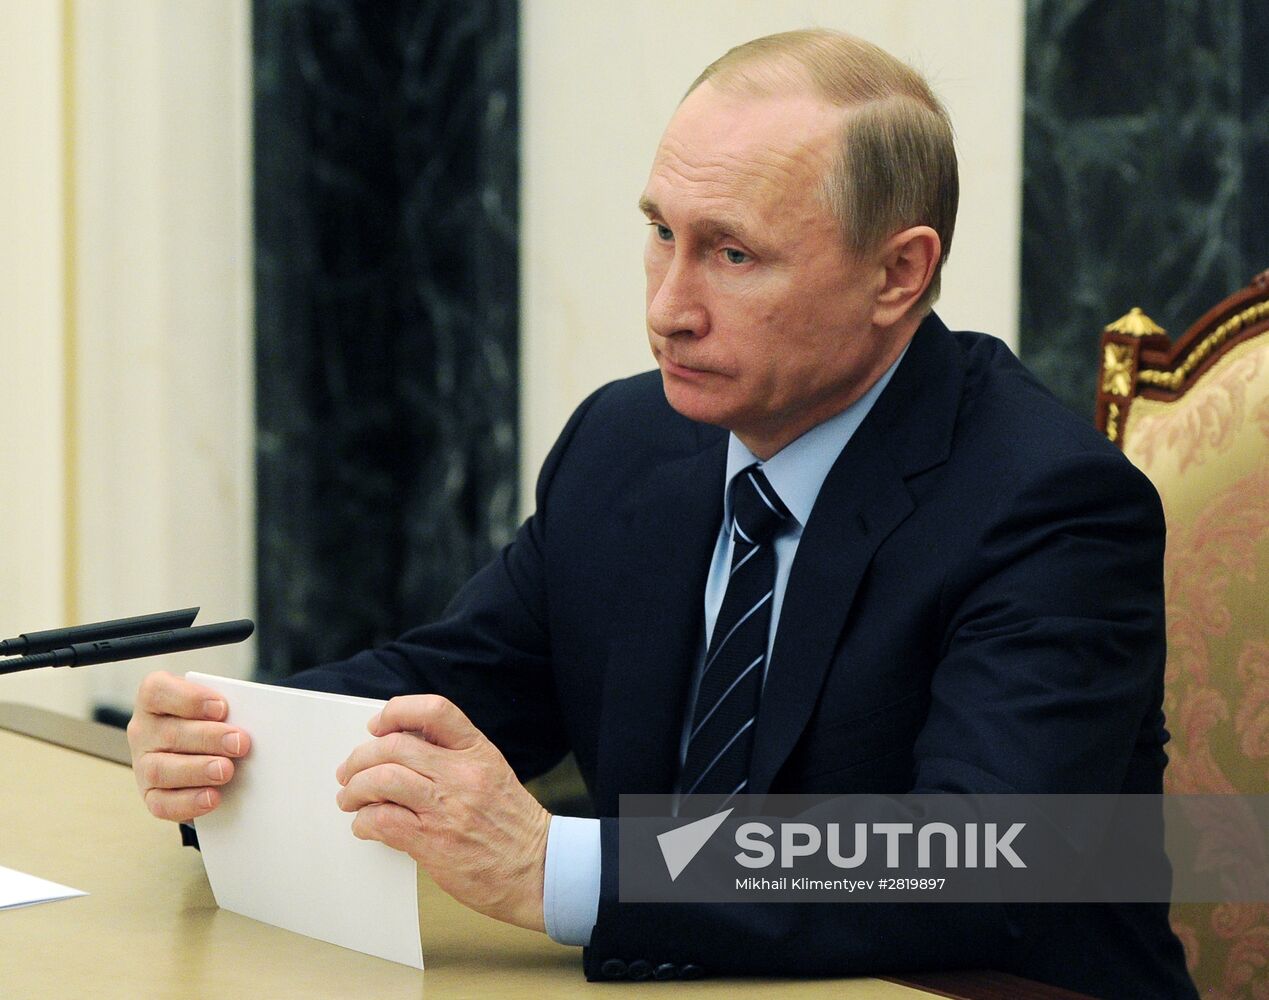 President Vladimir Putin holds meeting on electric power undustry development